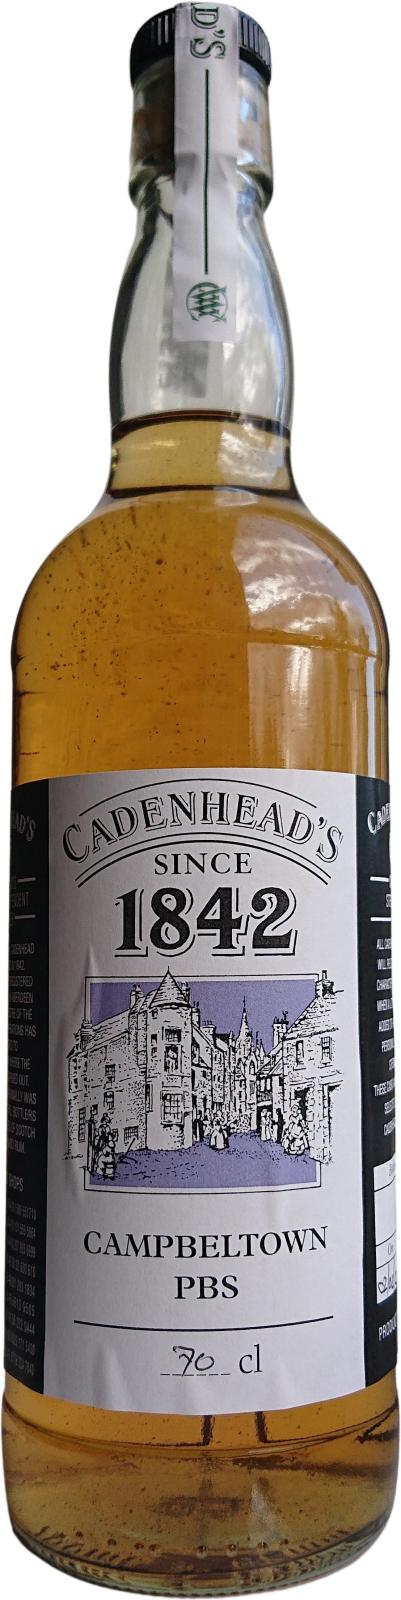 Campbeltown PBS Cadenhead's 1842 CA Sherry oak lightly peated 56.9% 700ml